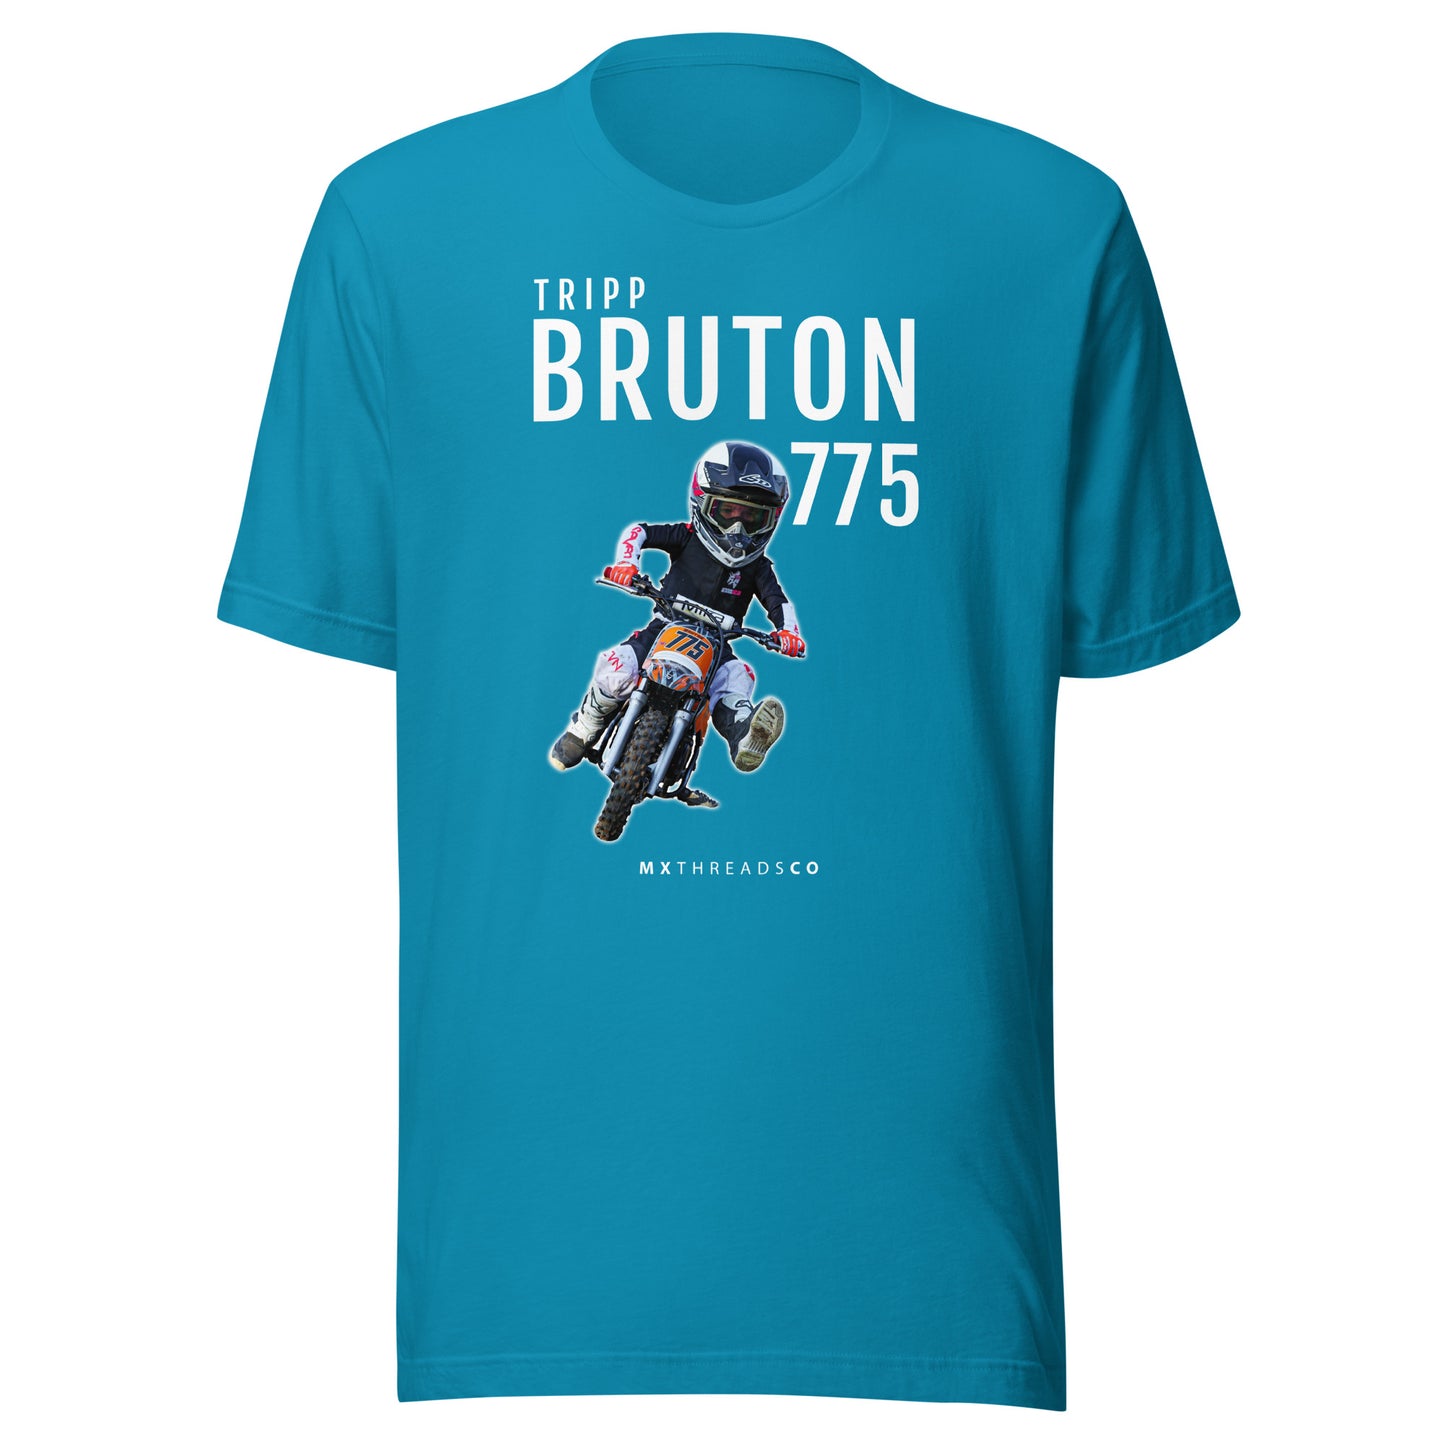 Tripp Bruton Photo-Graphic Series T-Shirt